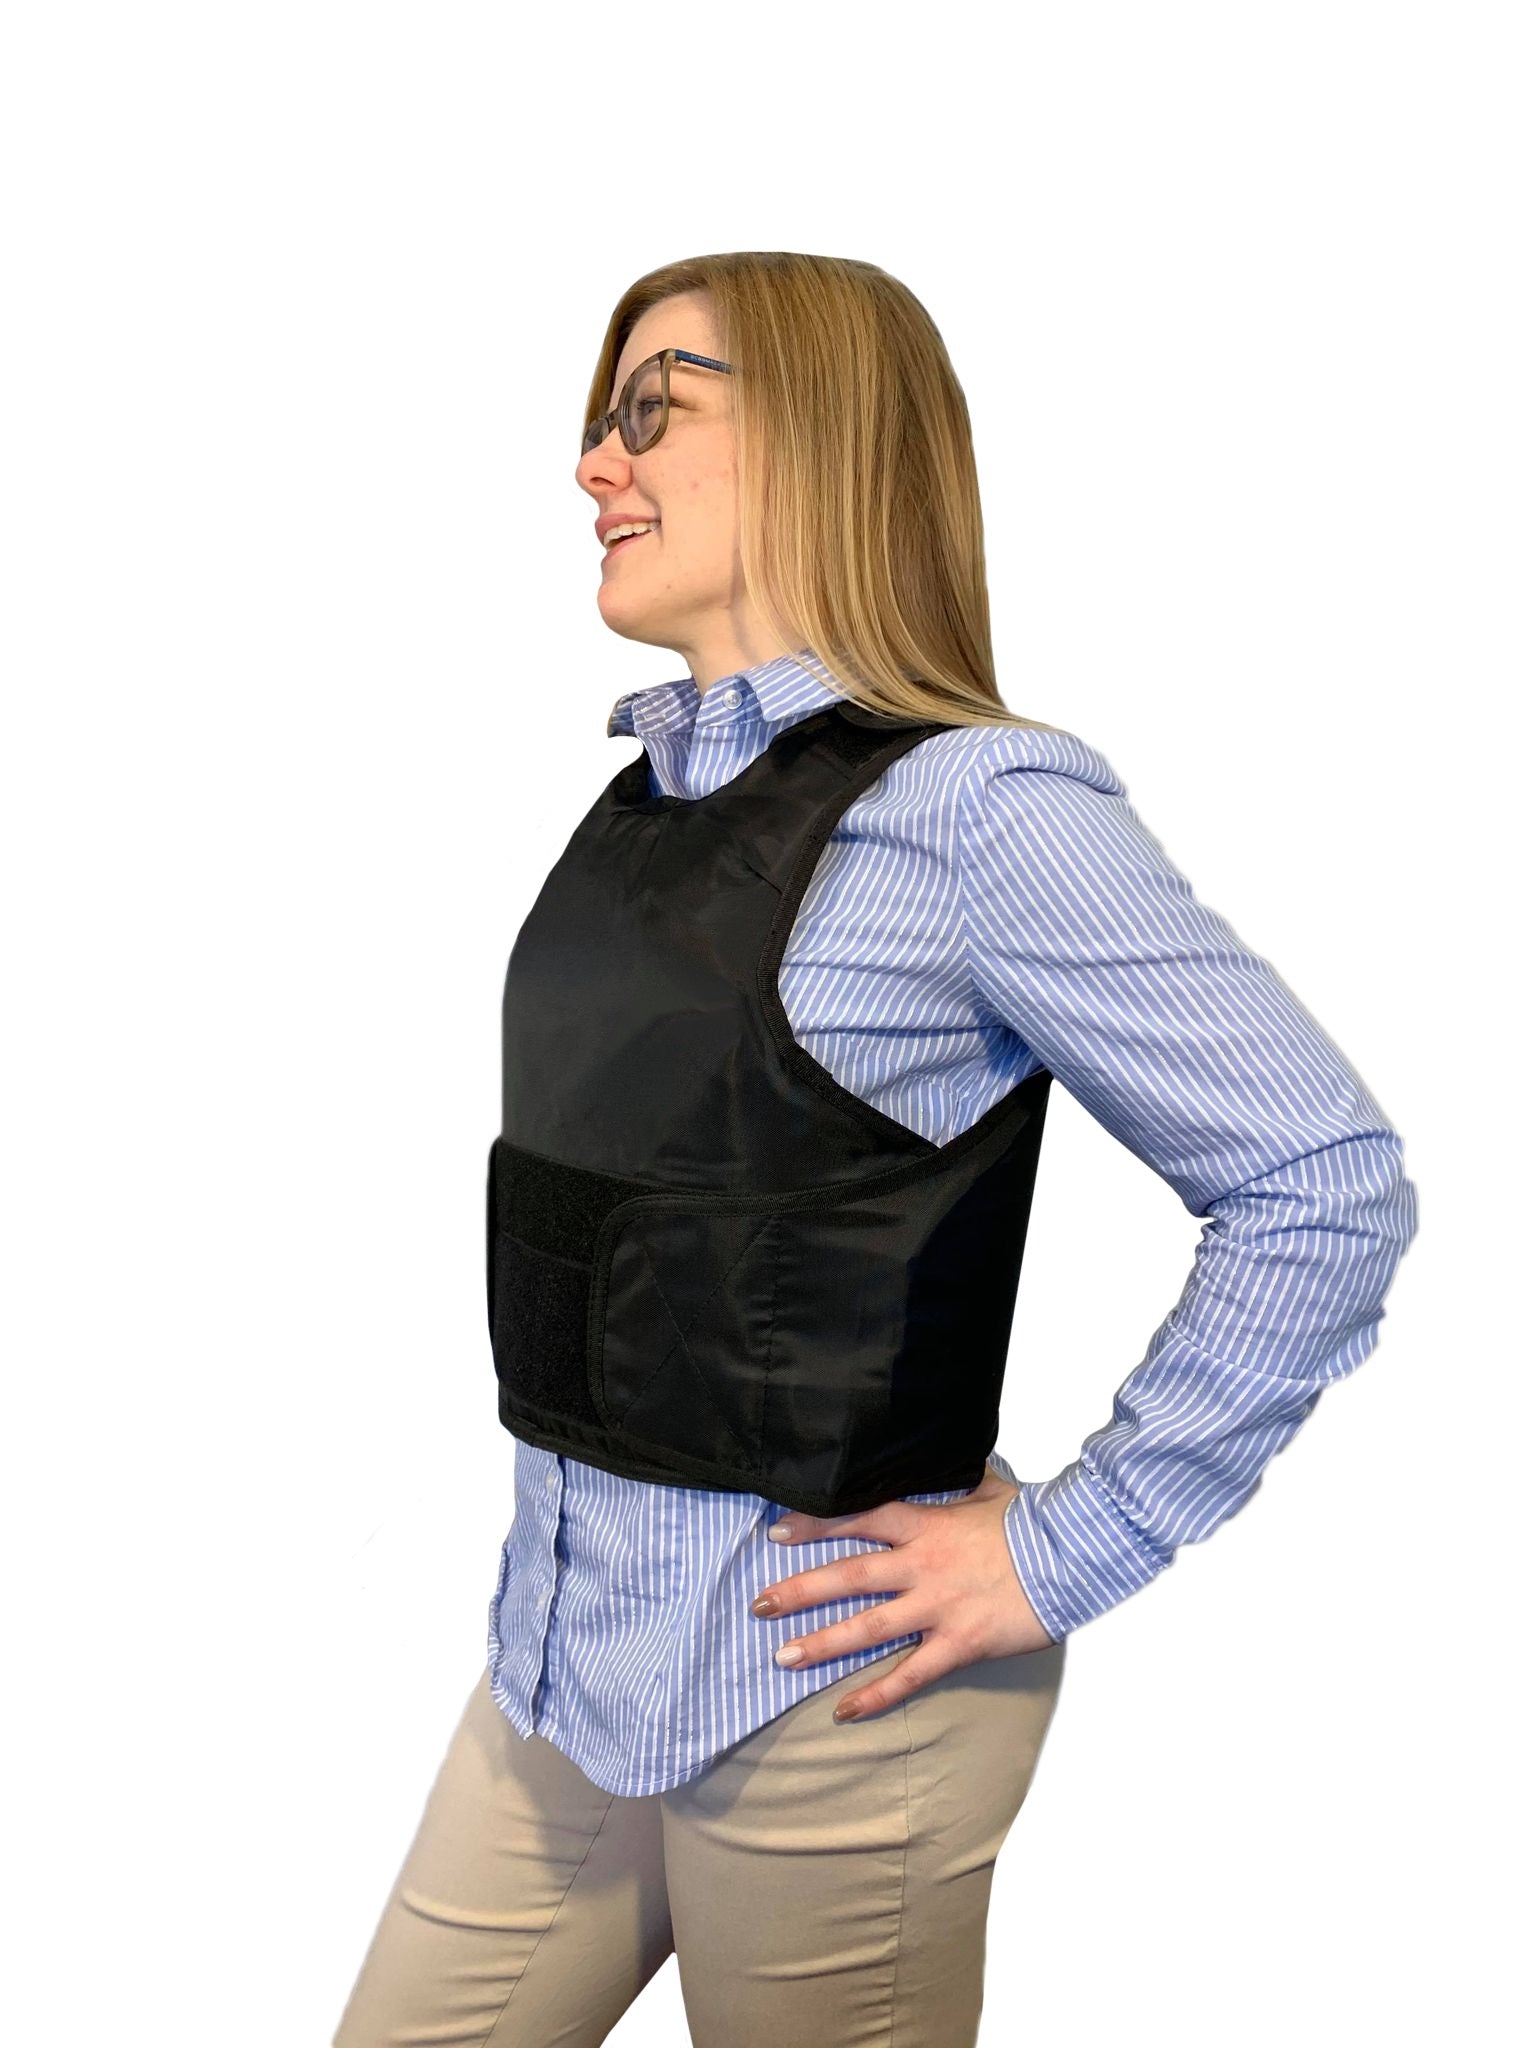 Bulletproof Clothing, Vest and Jacket